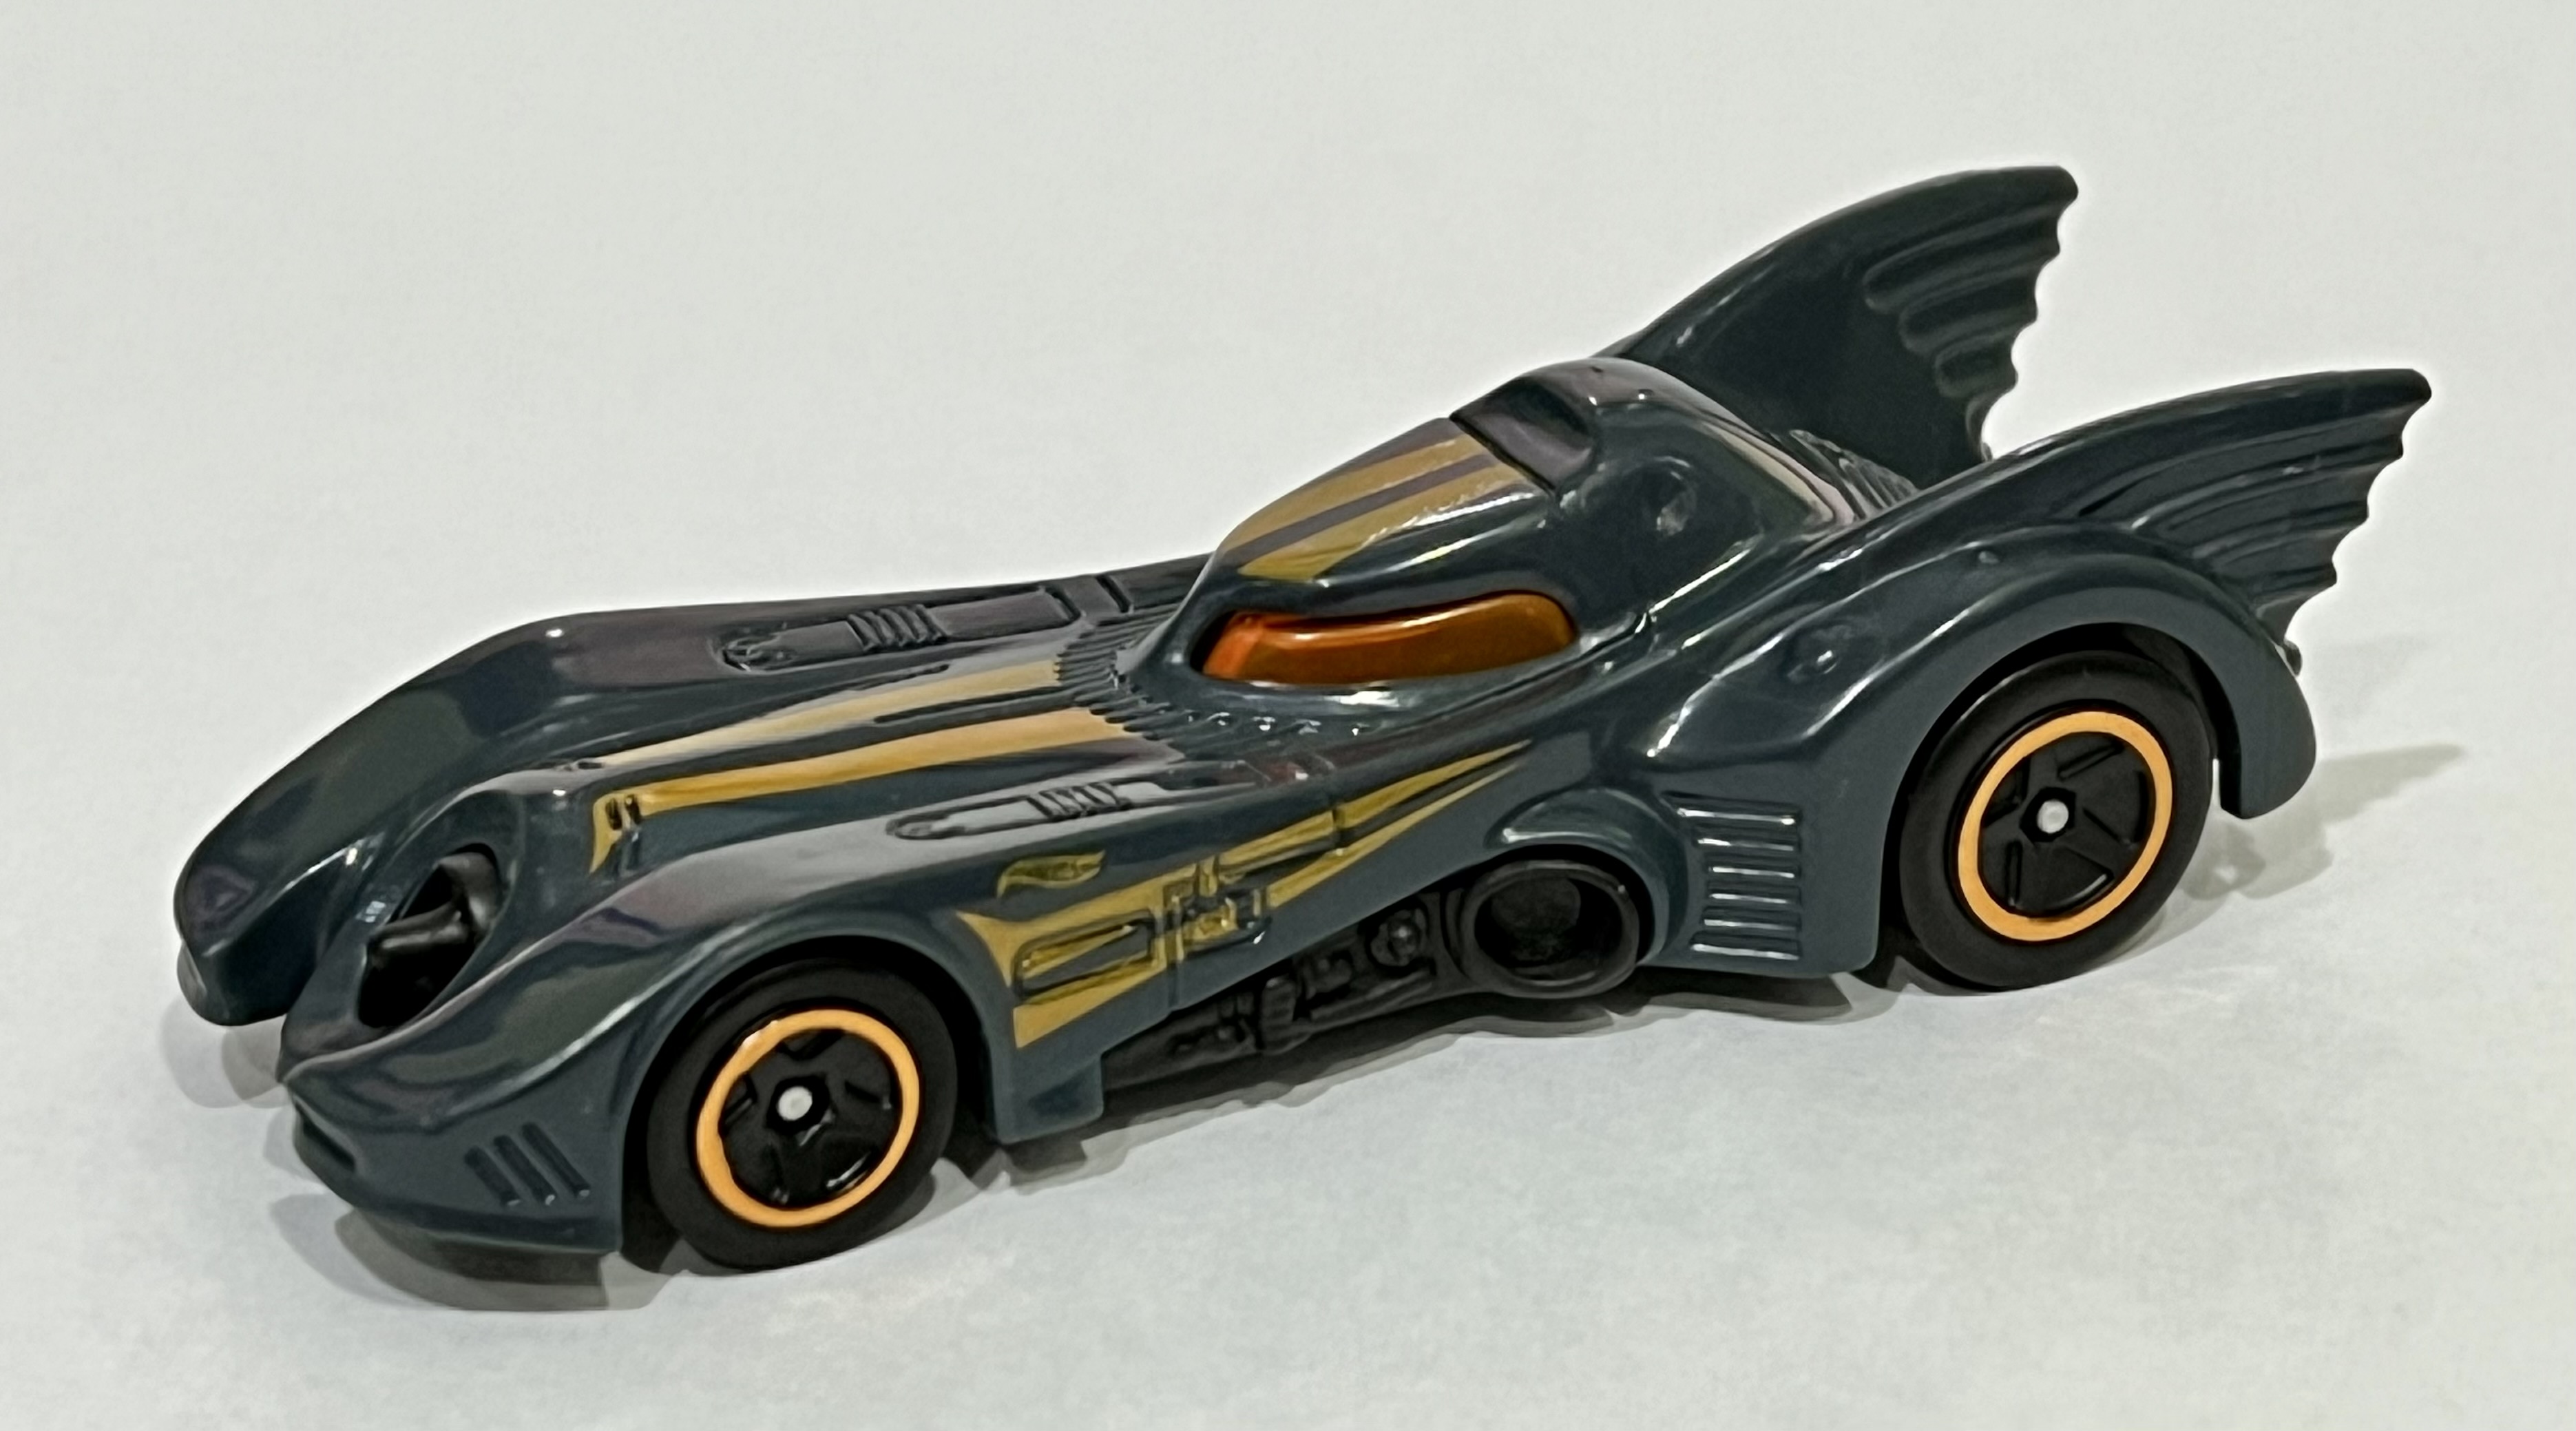  Hot Wheels Batman Forever Batmobile, 2023 Batman 2/5 : Toys &  Games